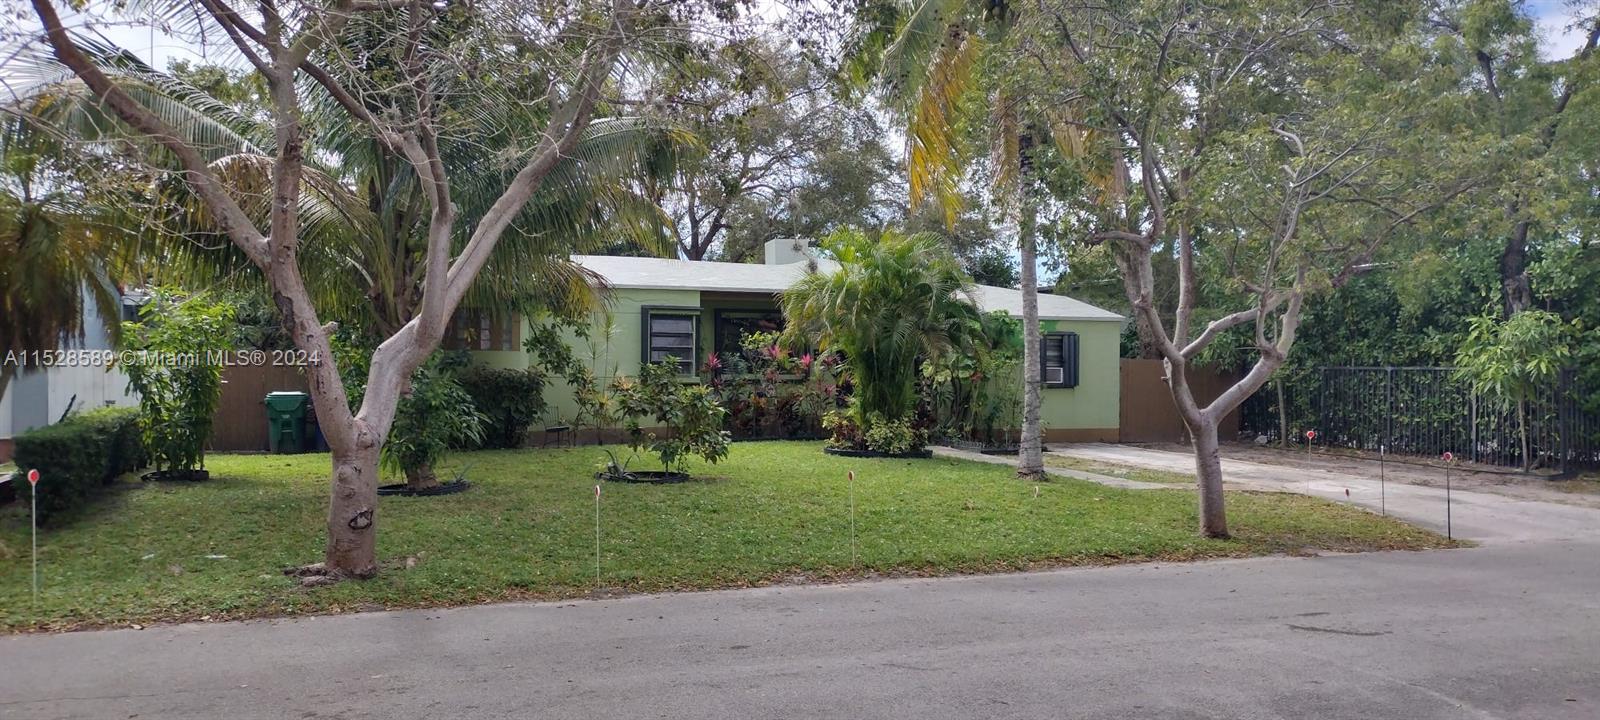 Address Not Disclosed, Miami, Broward County, Florida - 2 Bedrooms  
1 Bathrooms - 